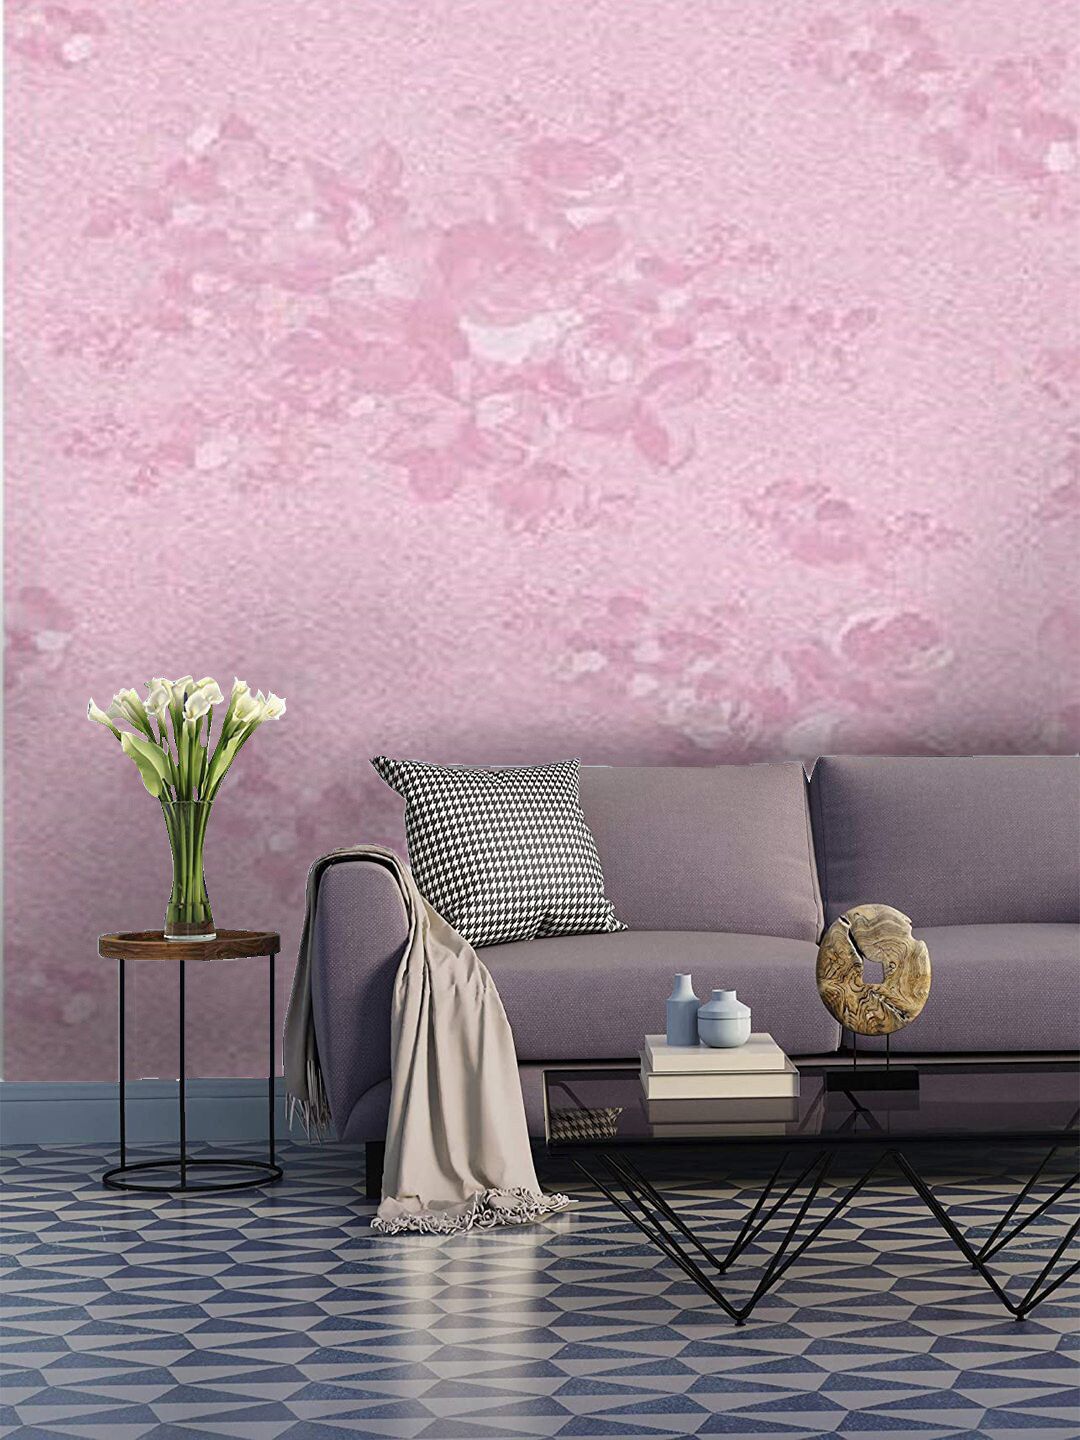 Jaamso Royals Pink Floral Self-Adhesive Waterproof Wallpaper Price in India